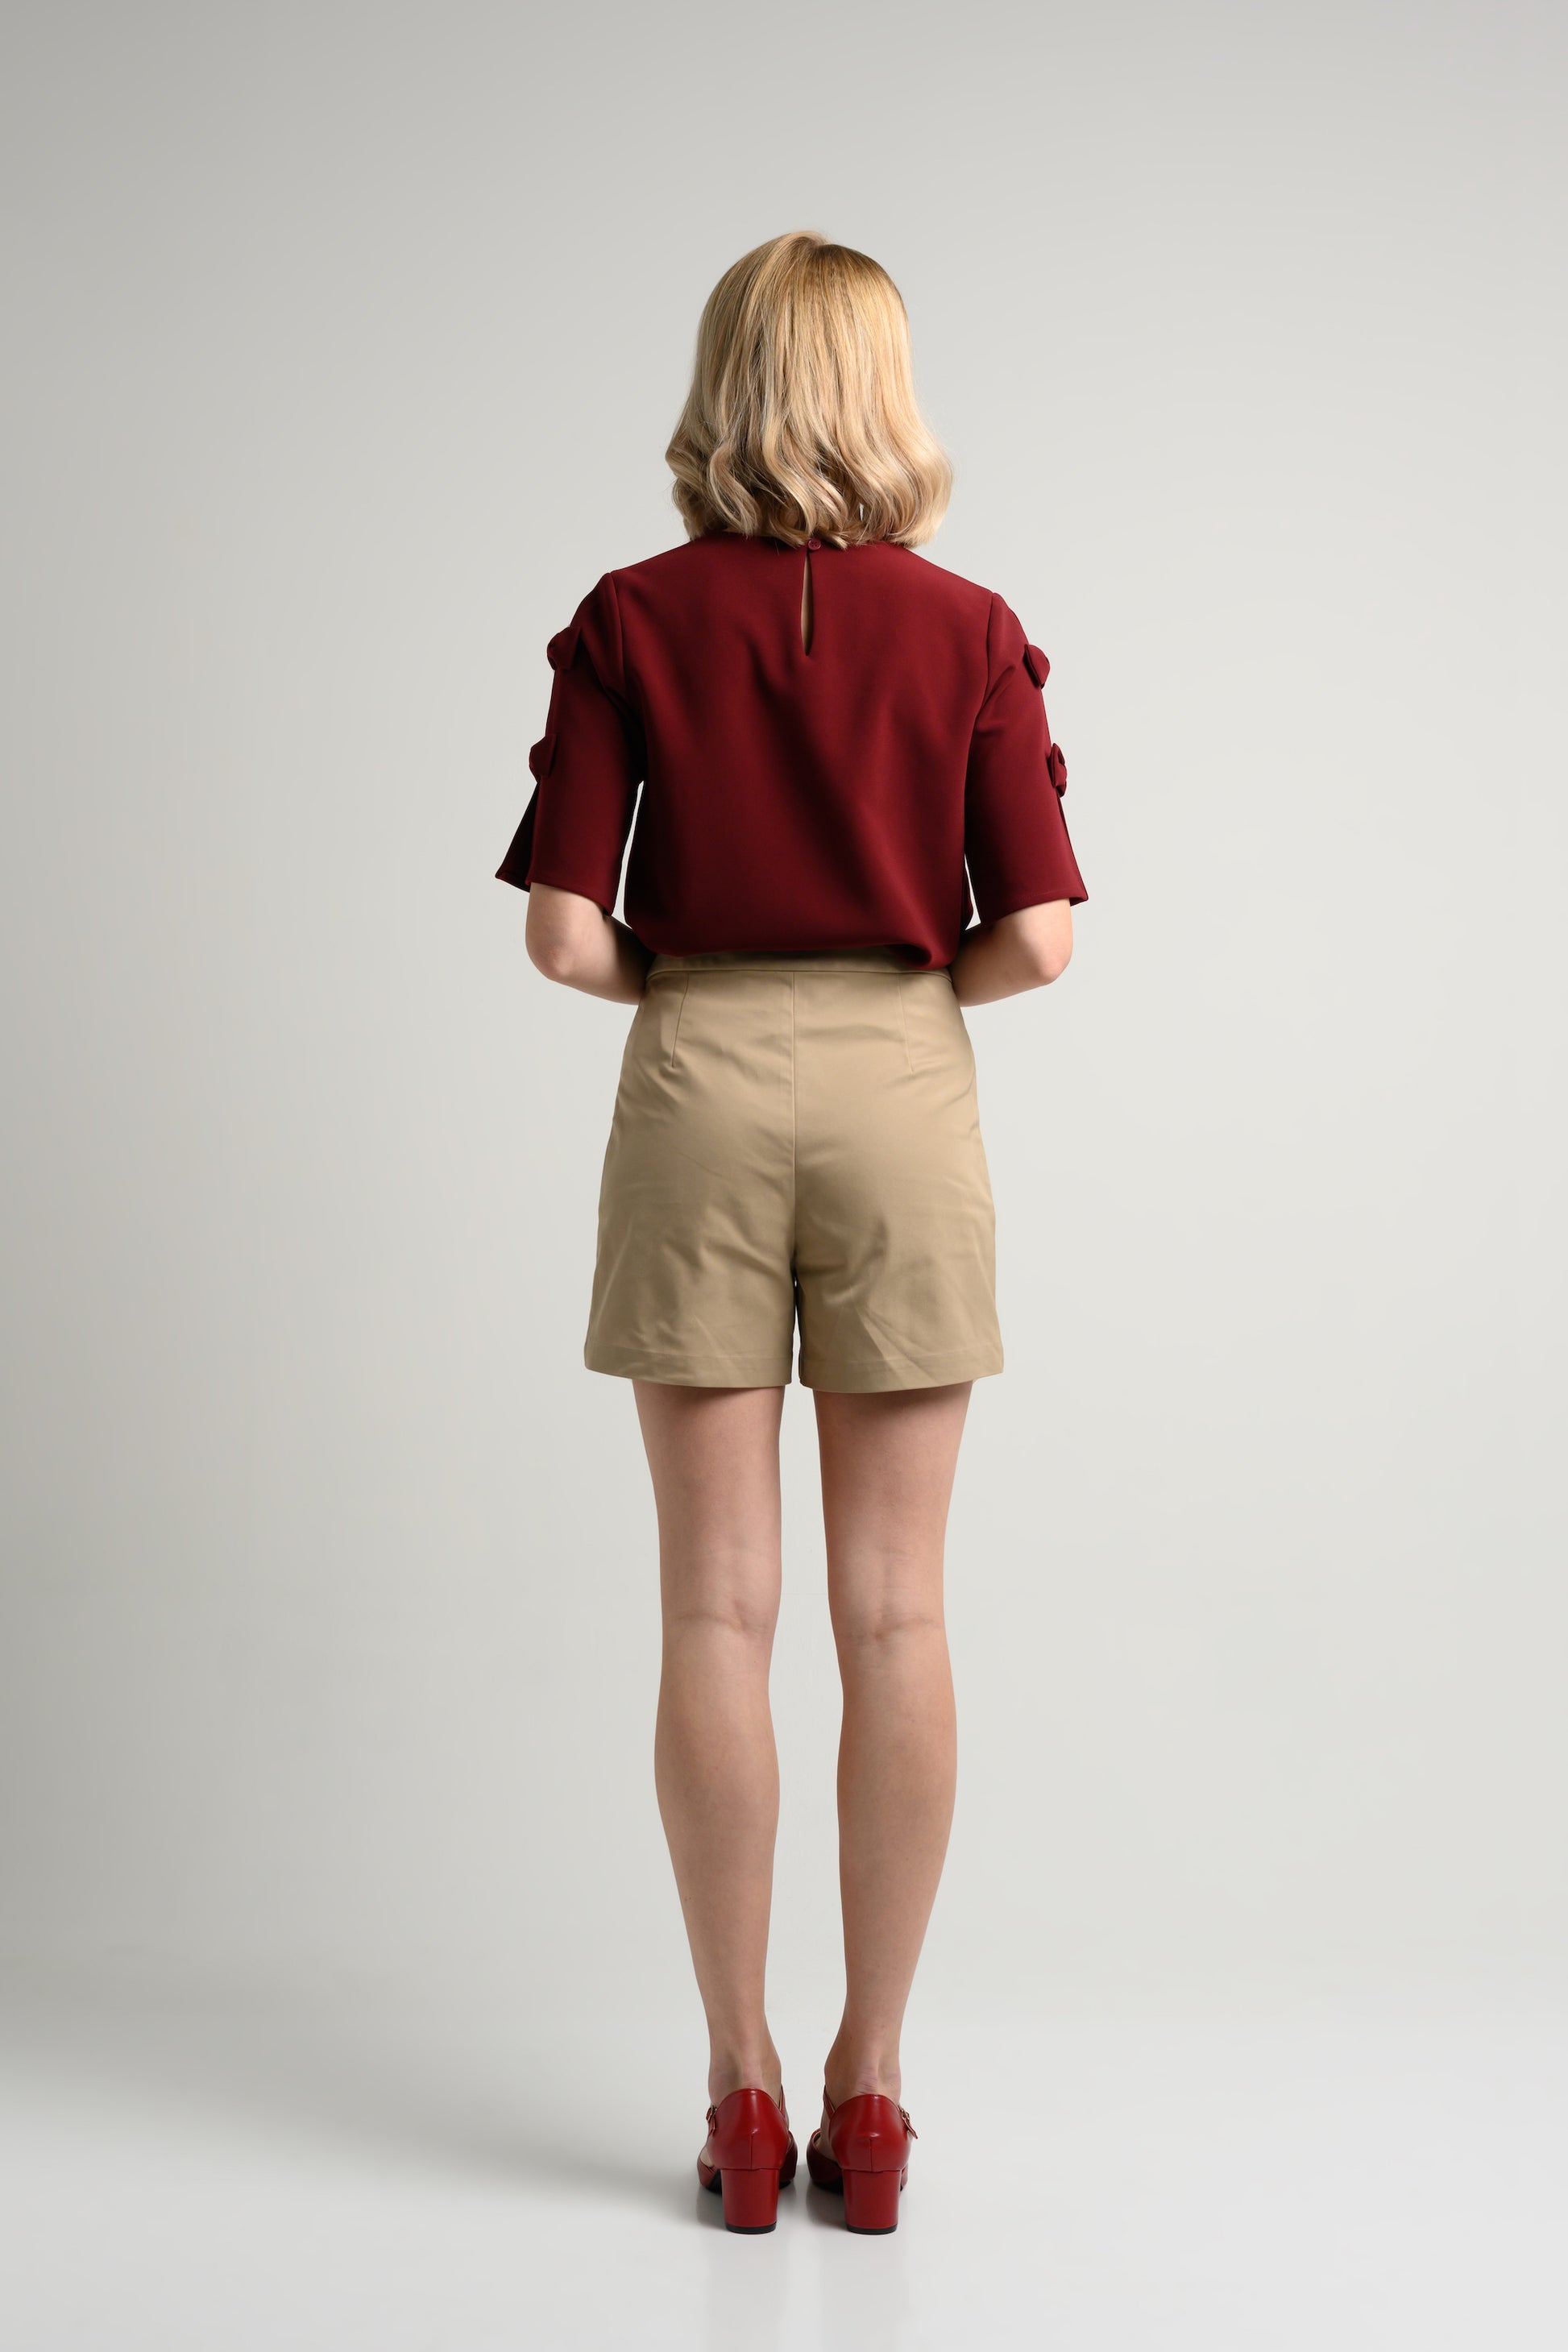 Rosylee Slim Fit High Waist Shorts - Khaki 4